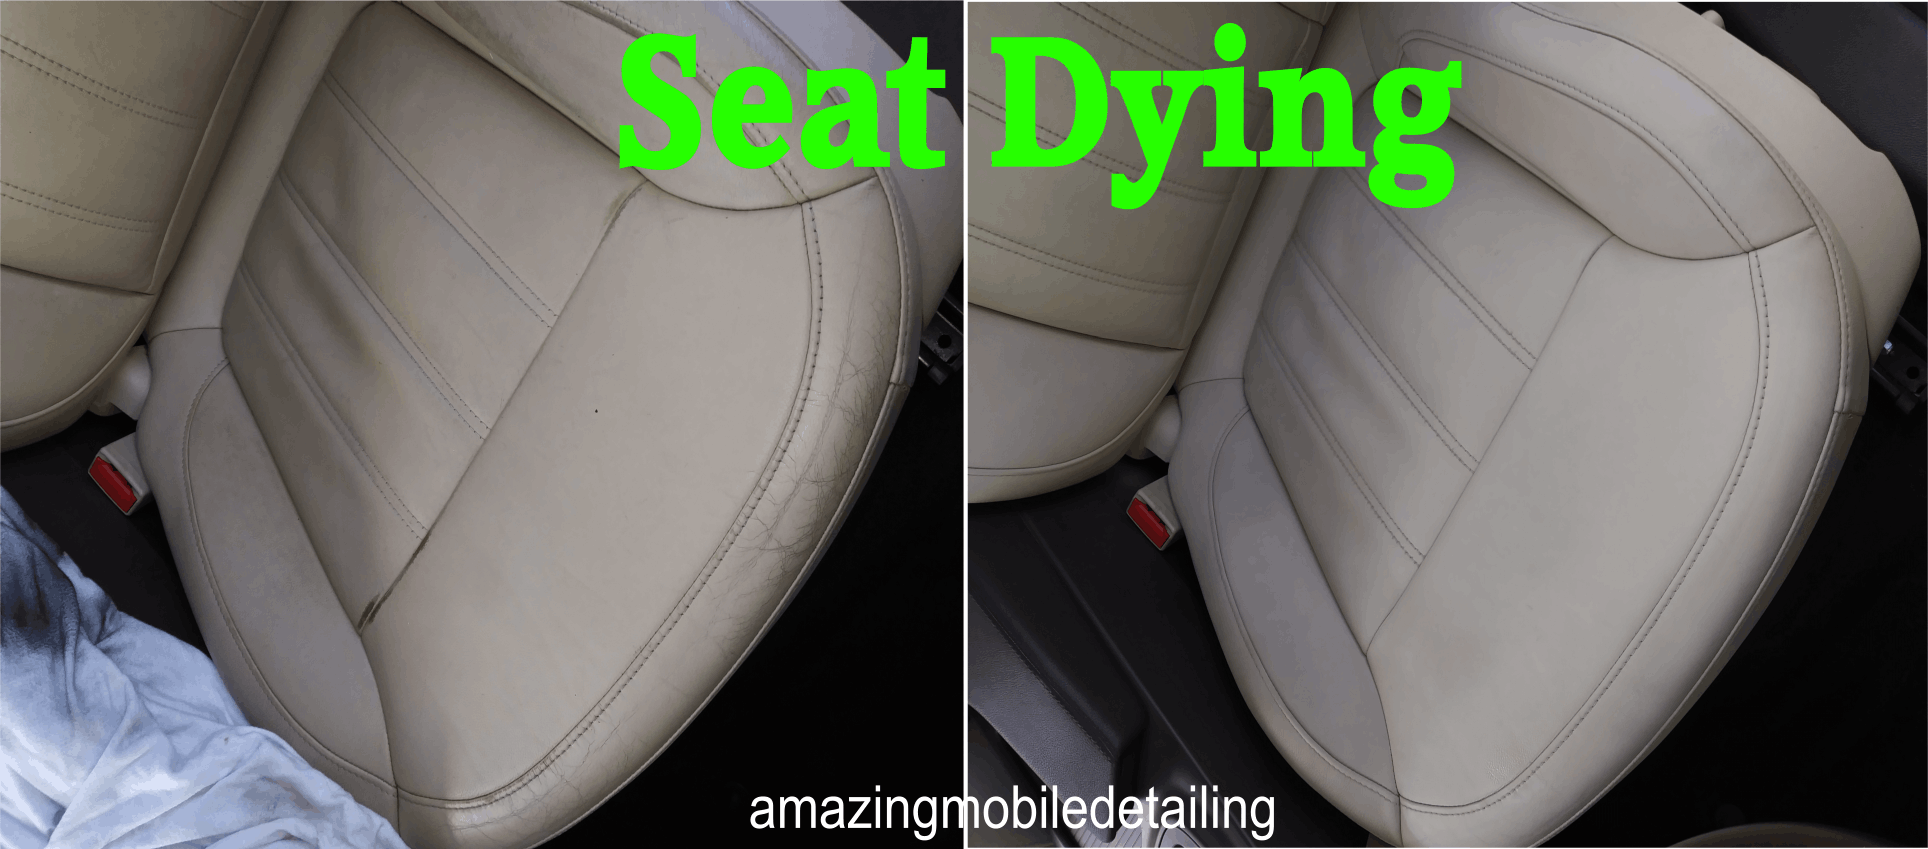 Seat Dying ORLANDO